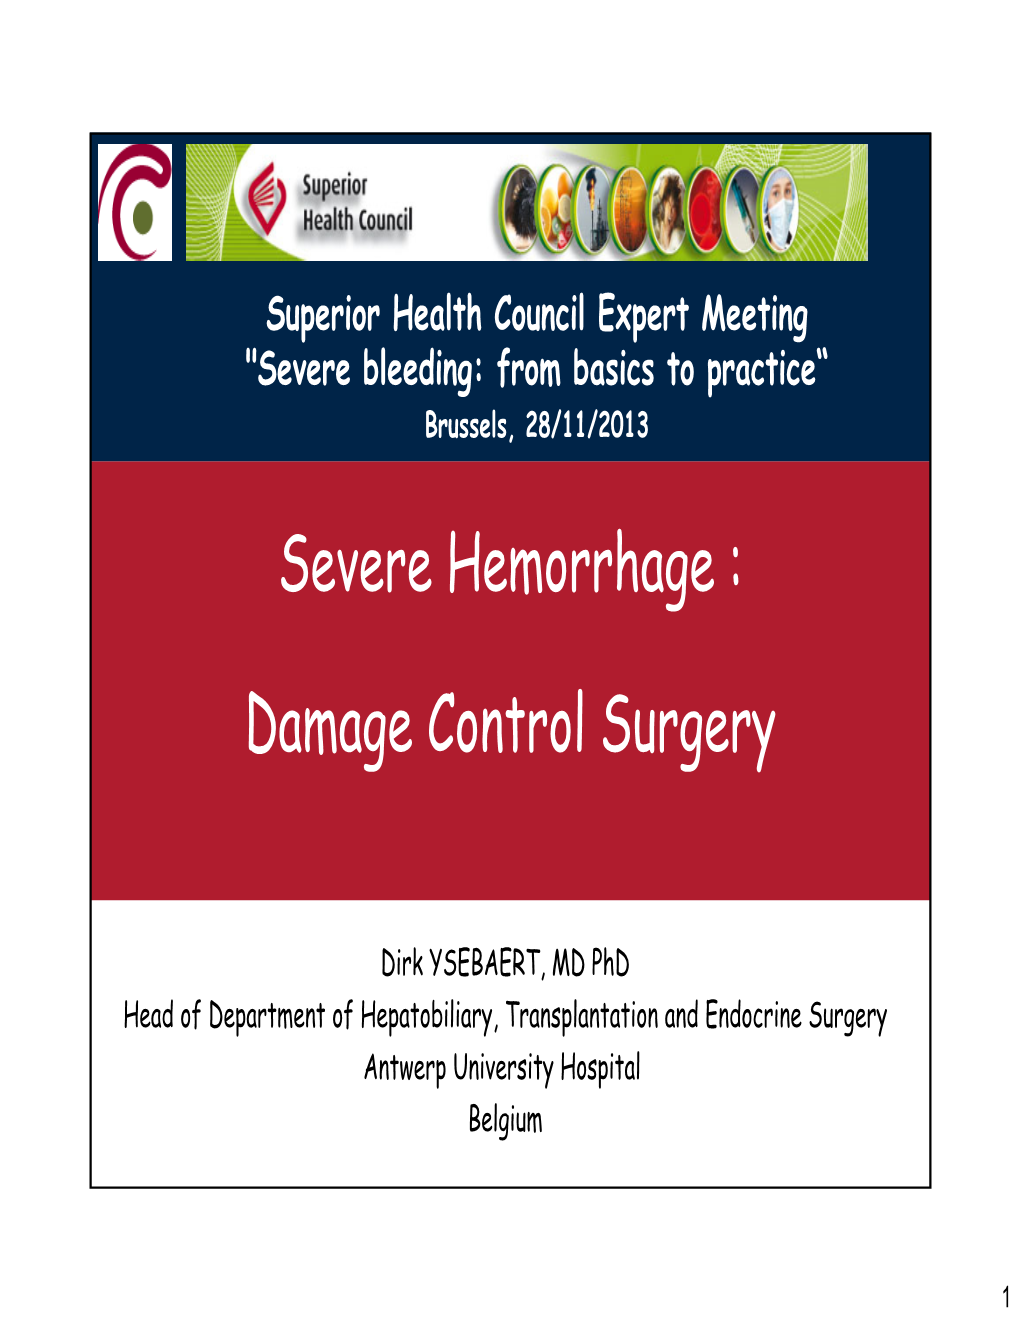 Severe Hemorrhage : Damage Control Surgery